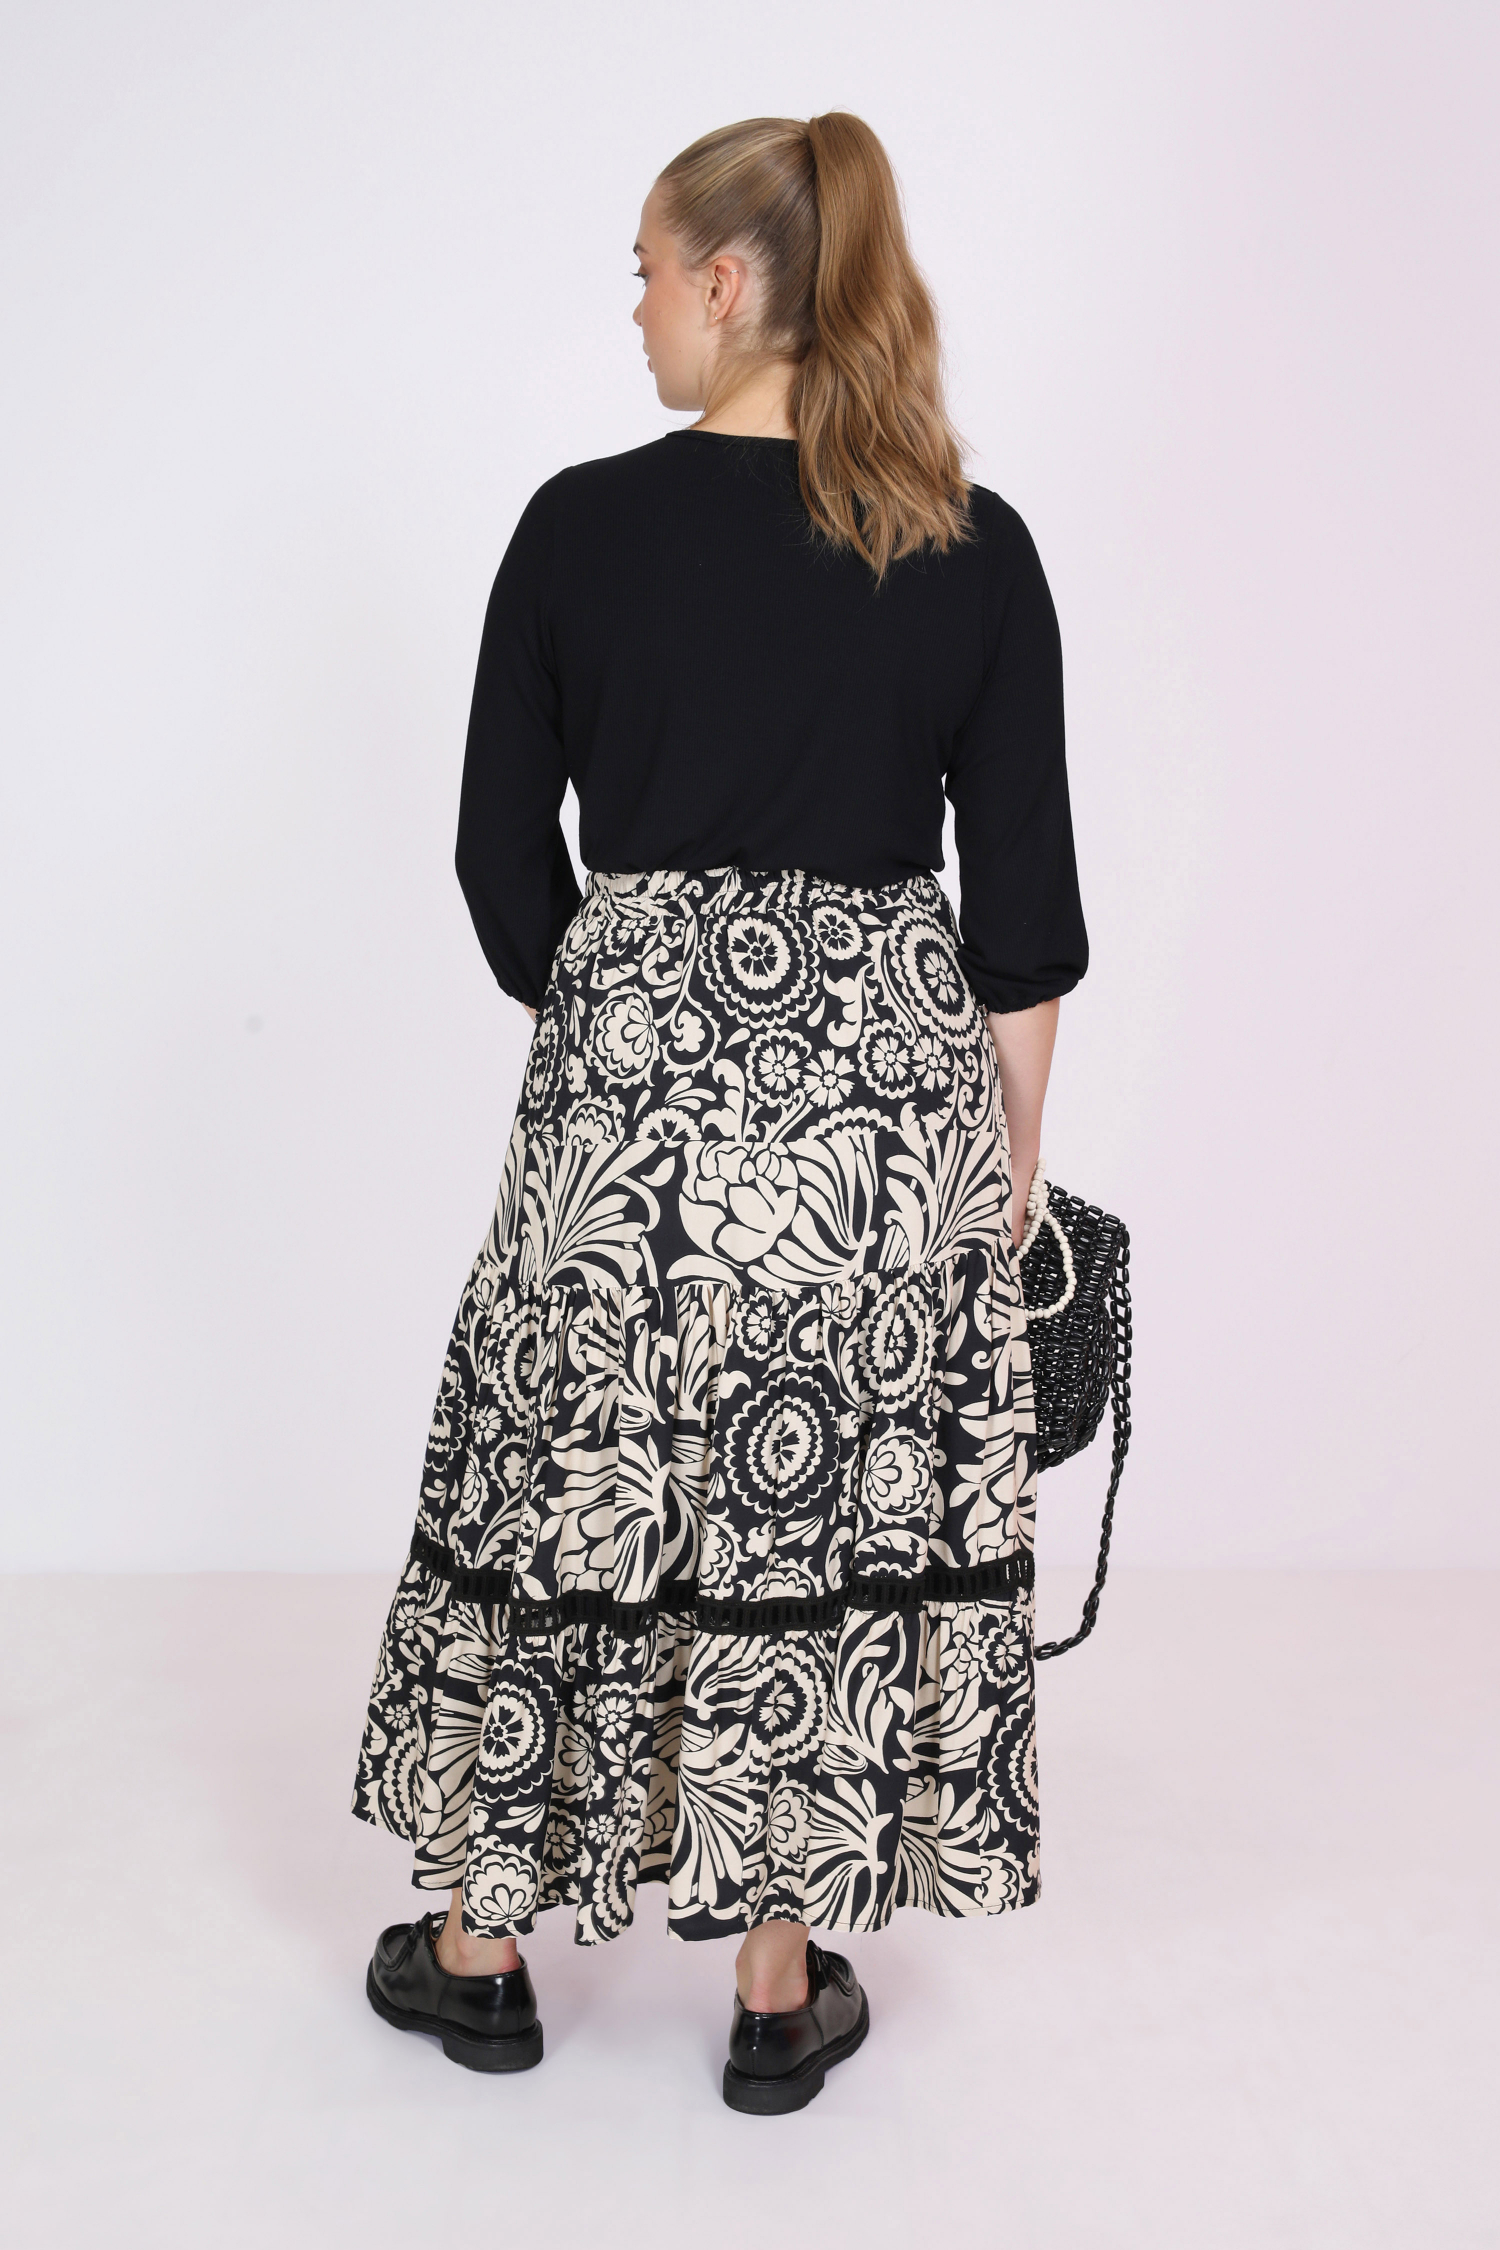 Bohemian style skirt in print.